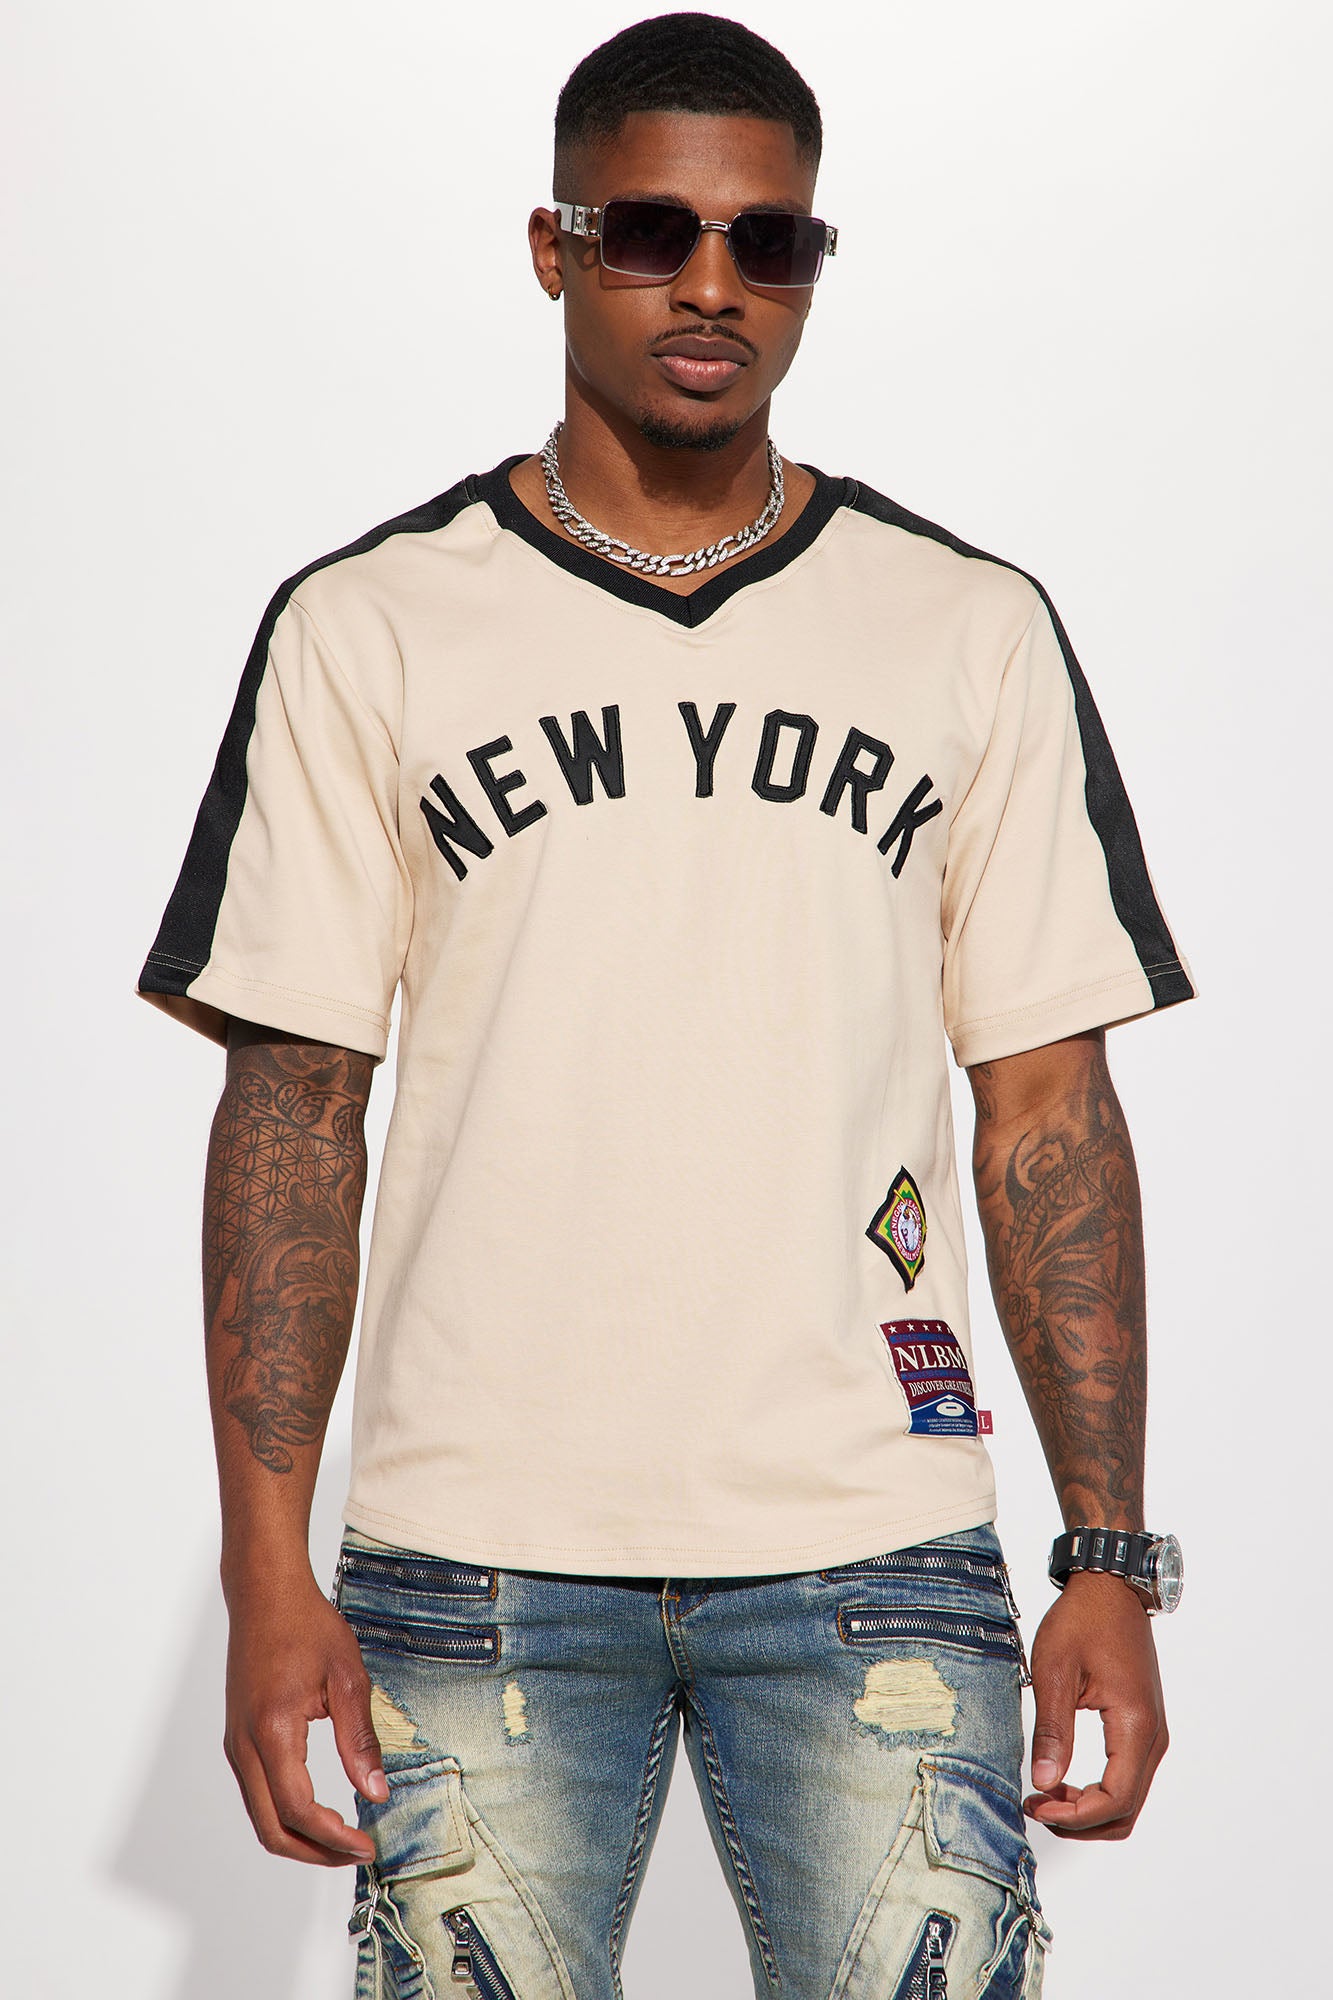 new york black yankees t shirts